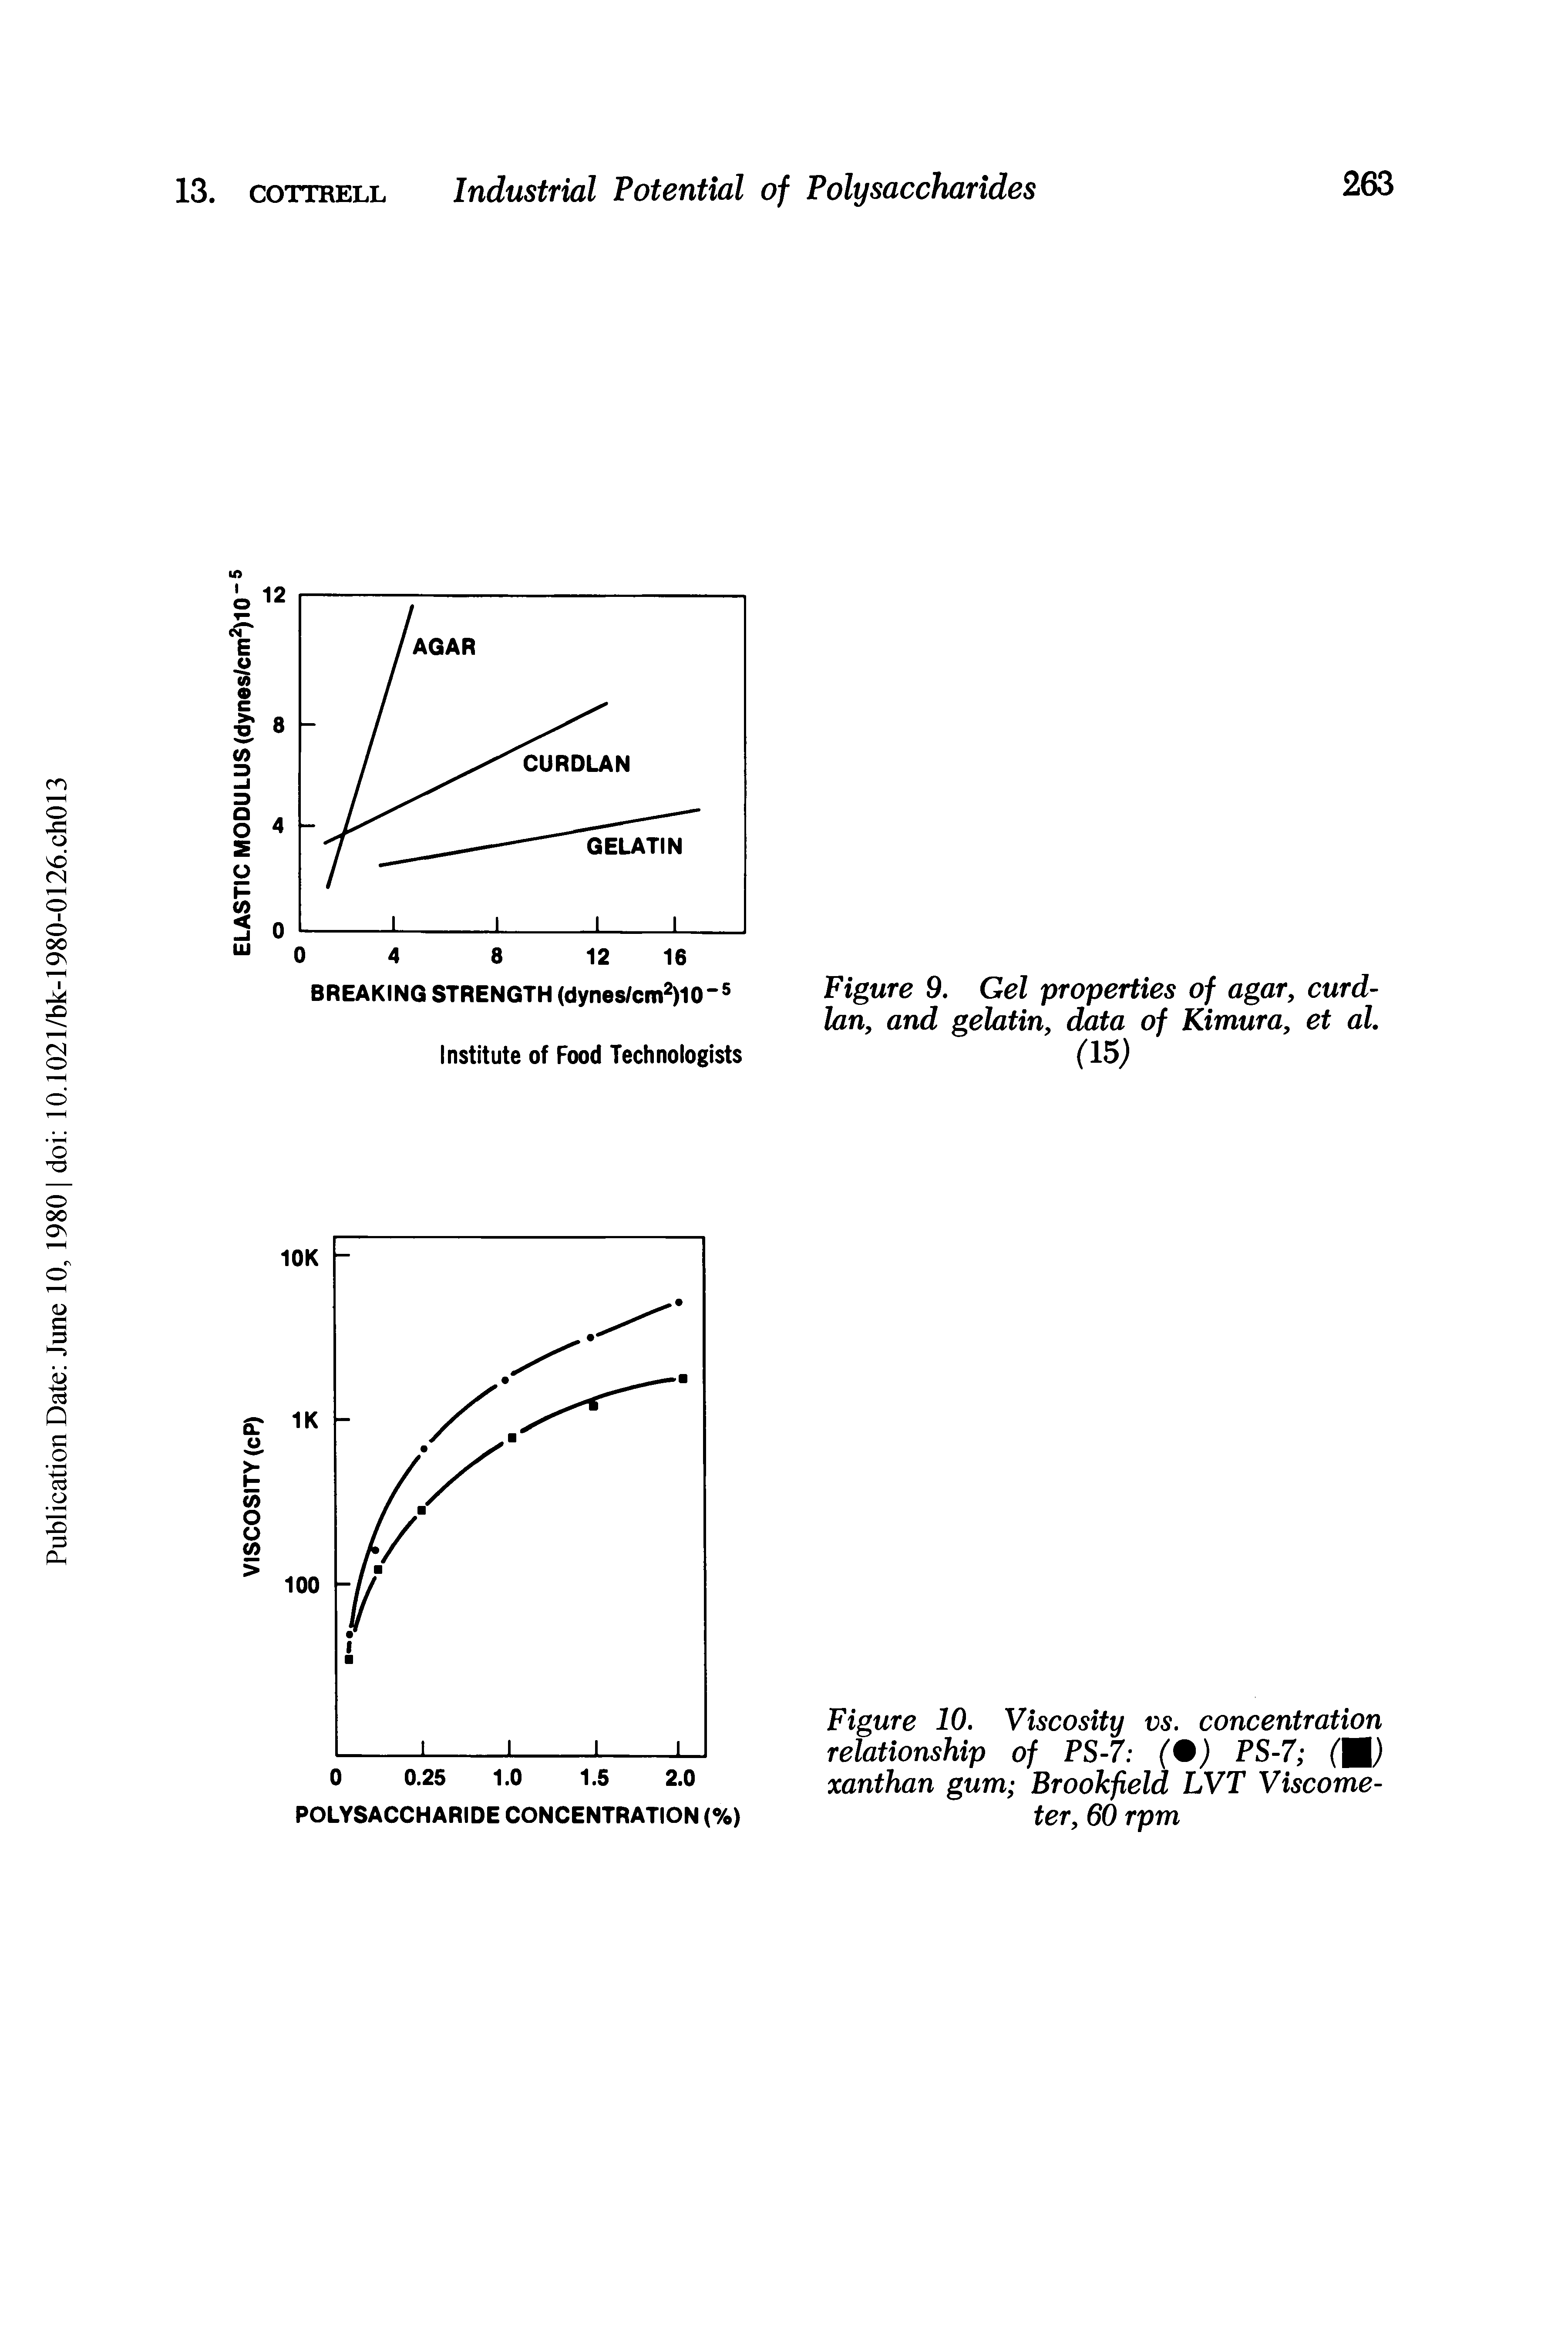 Figure 10. Viscosity vs. concentration relationship of PS-7 ( ) PS-7 (H) xanthan gum Brookfield LVT Viscometer, 60 rpm...